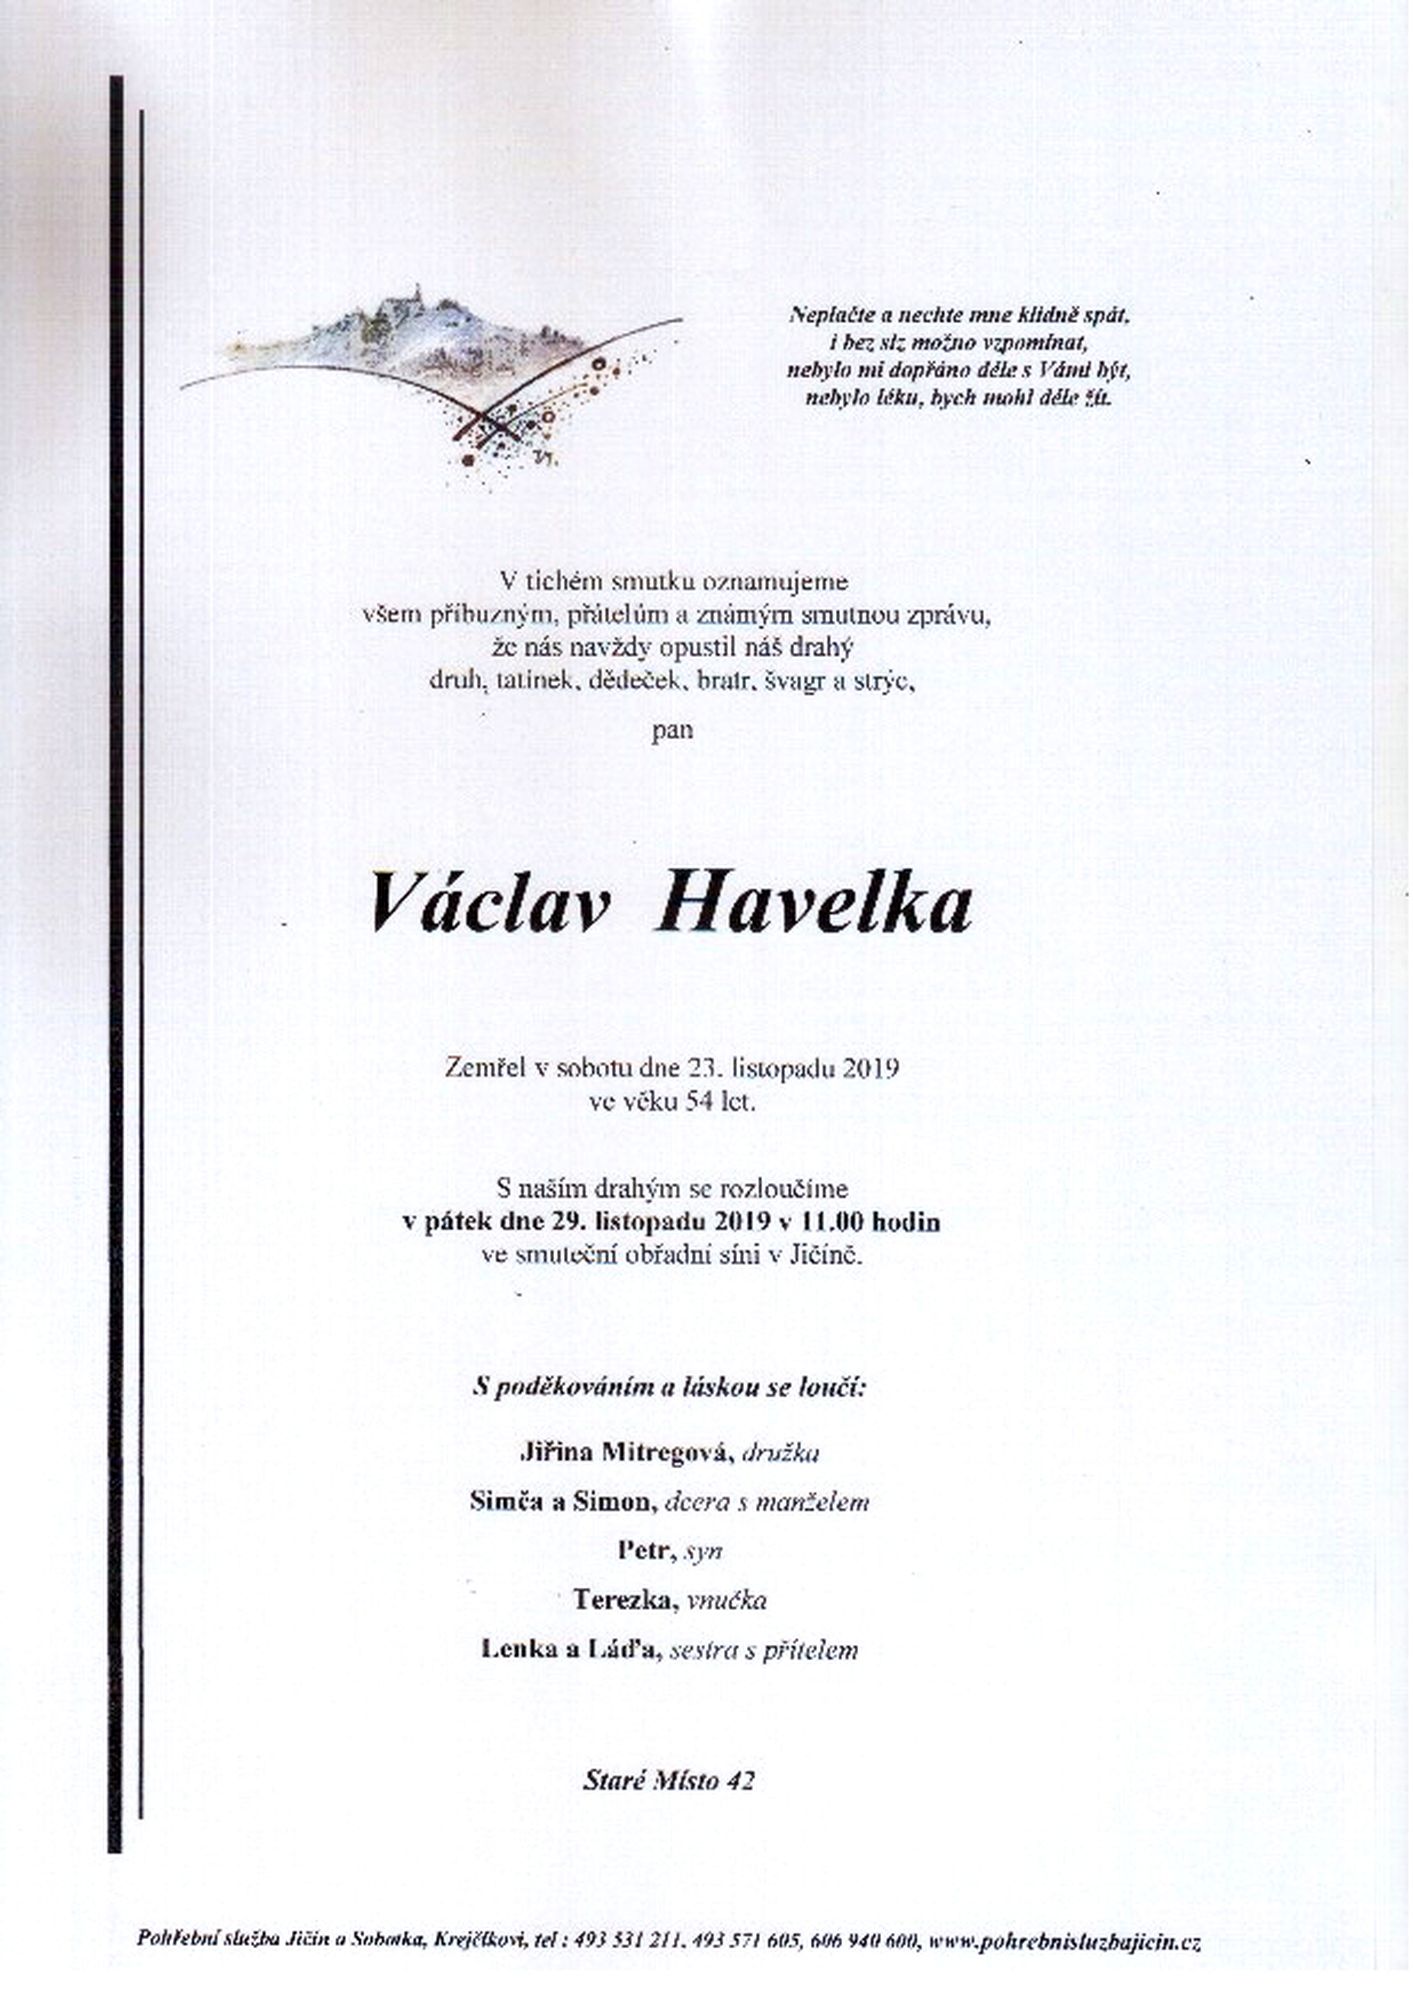 Václav Havelka